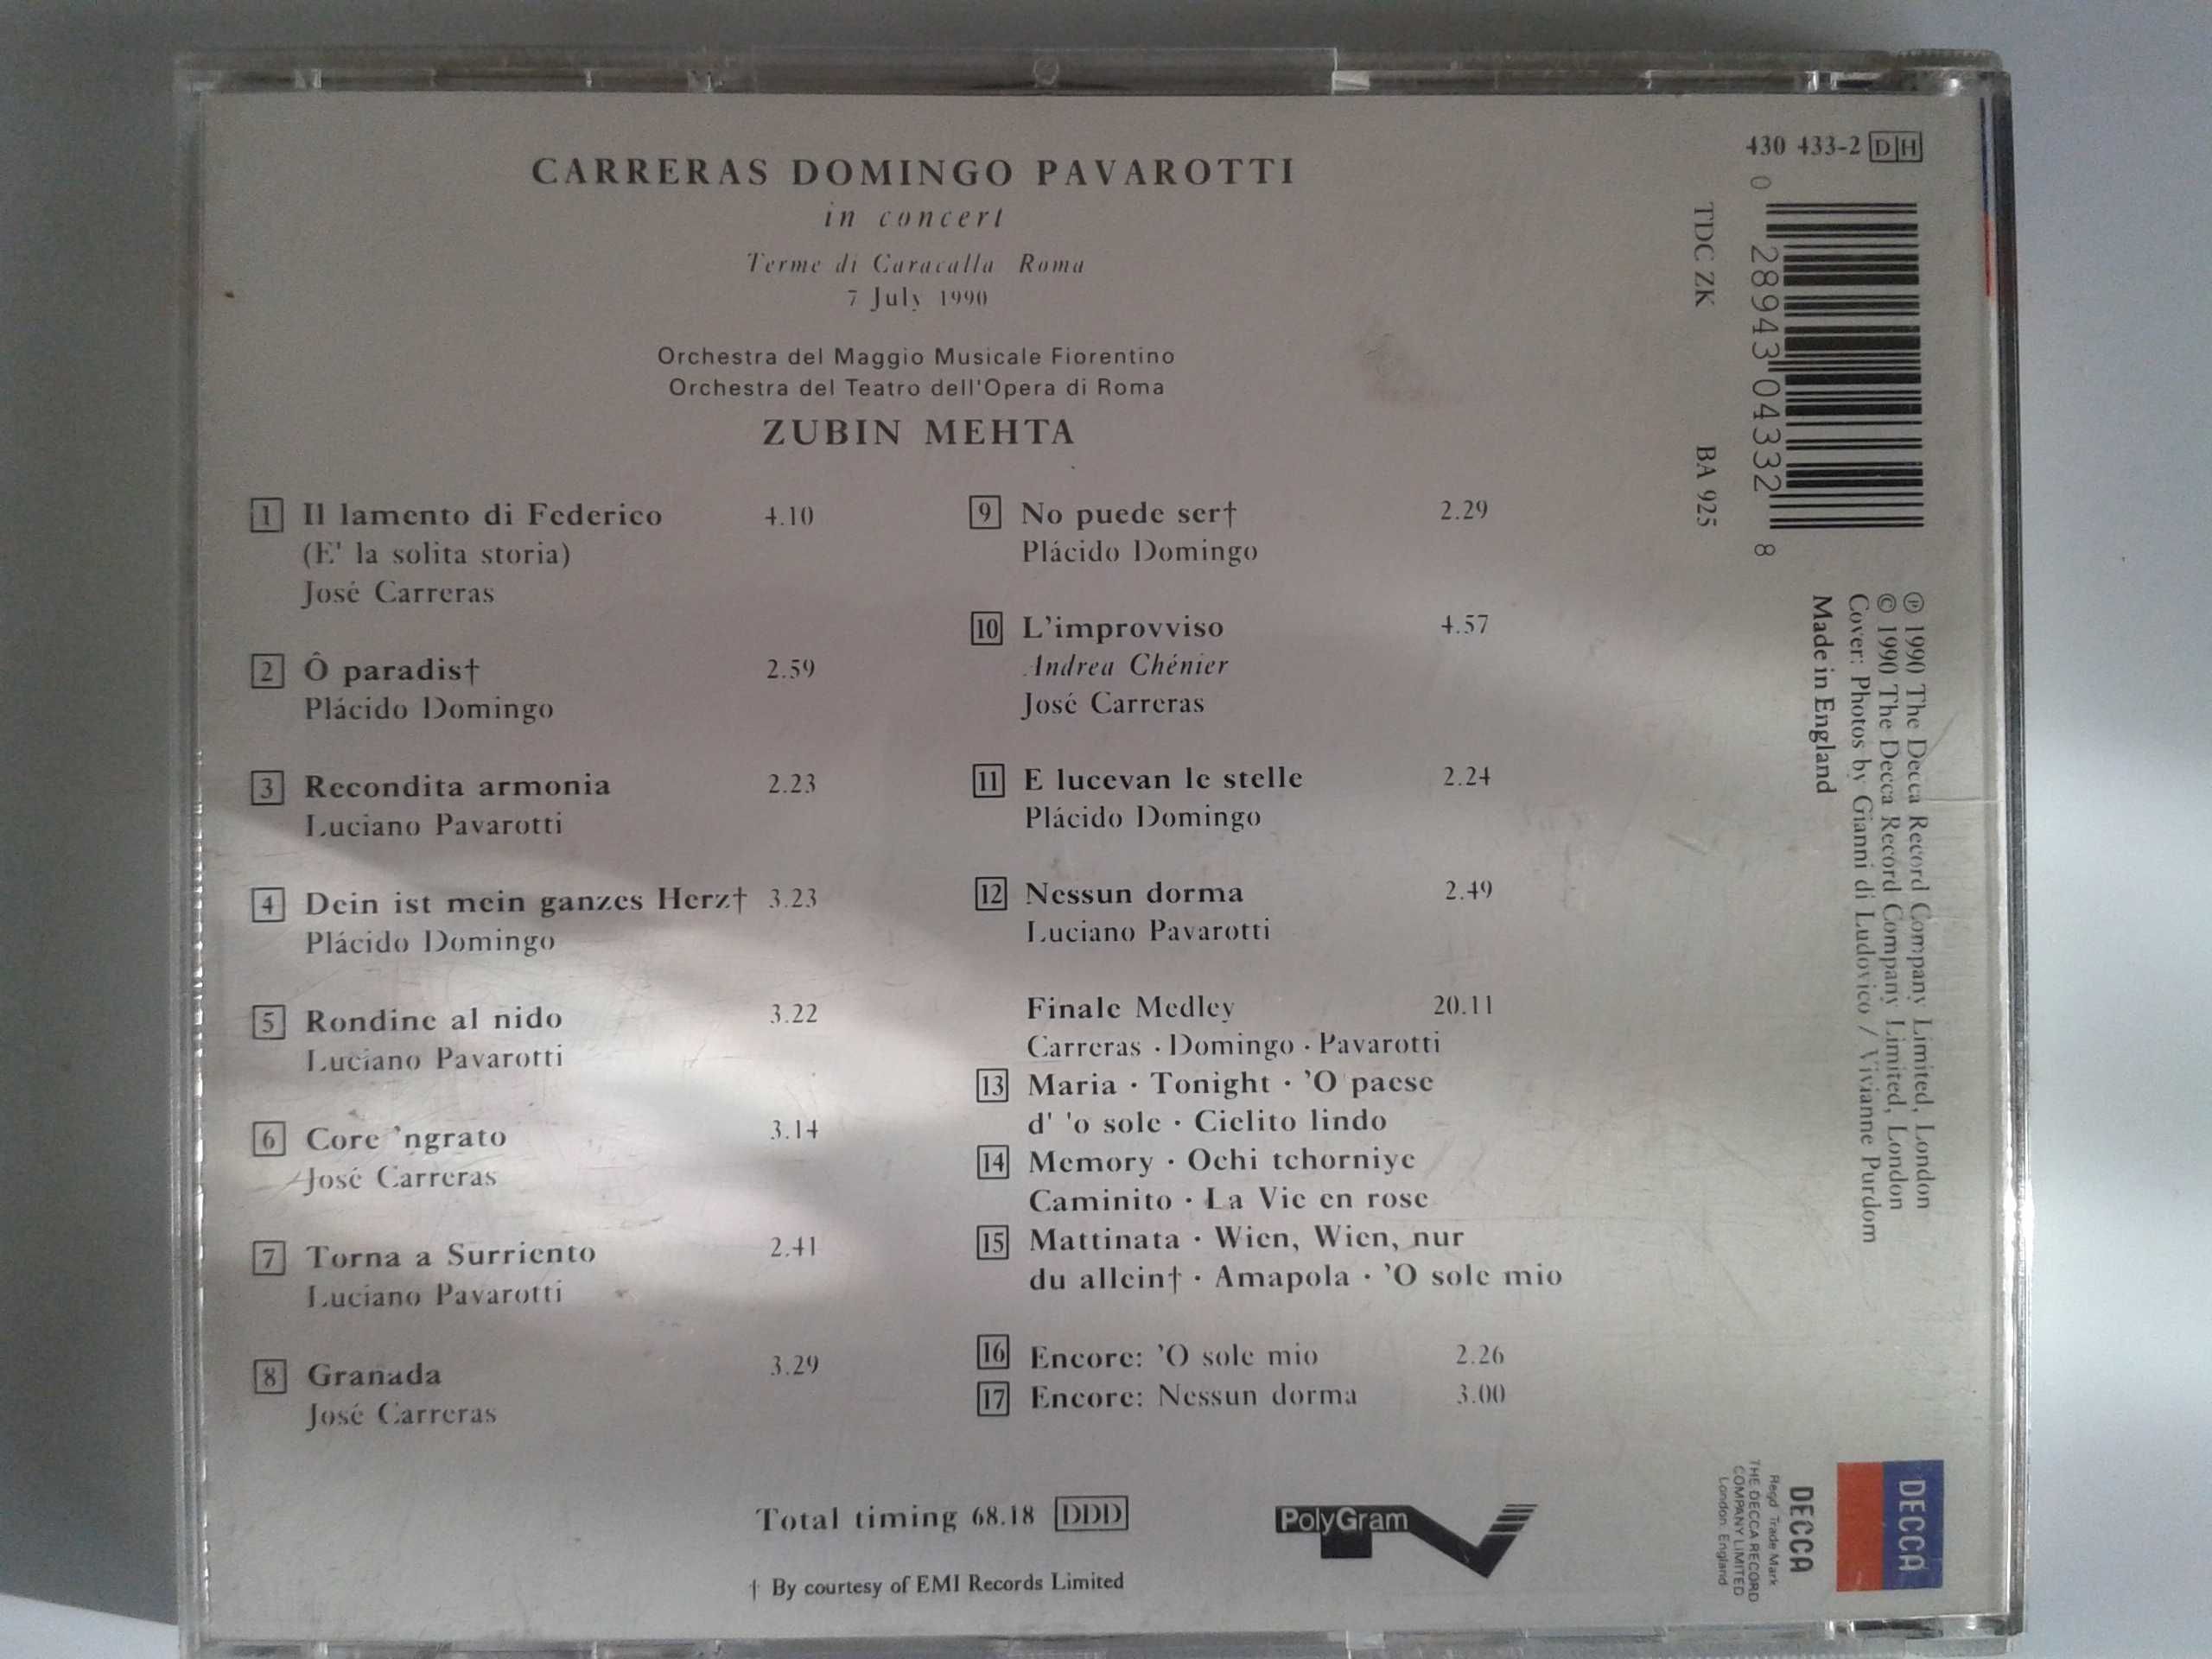 Cd Carreras Domingo Pavarotti "in concert"